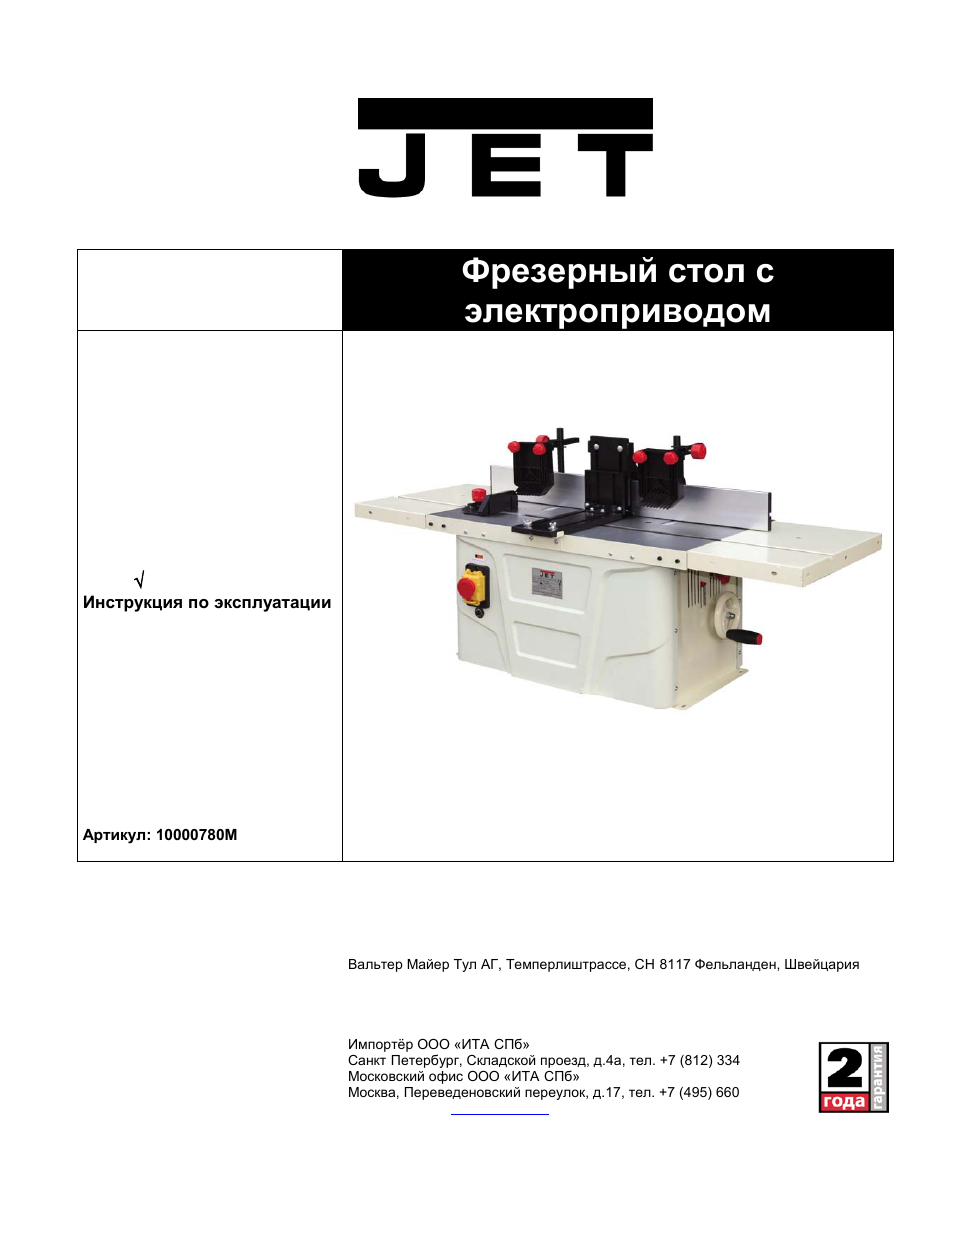 Стол фрезерный Jet JRT 1500